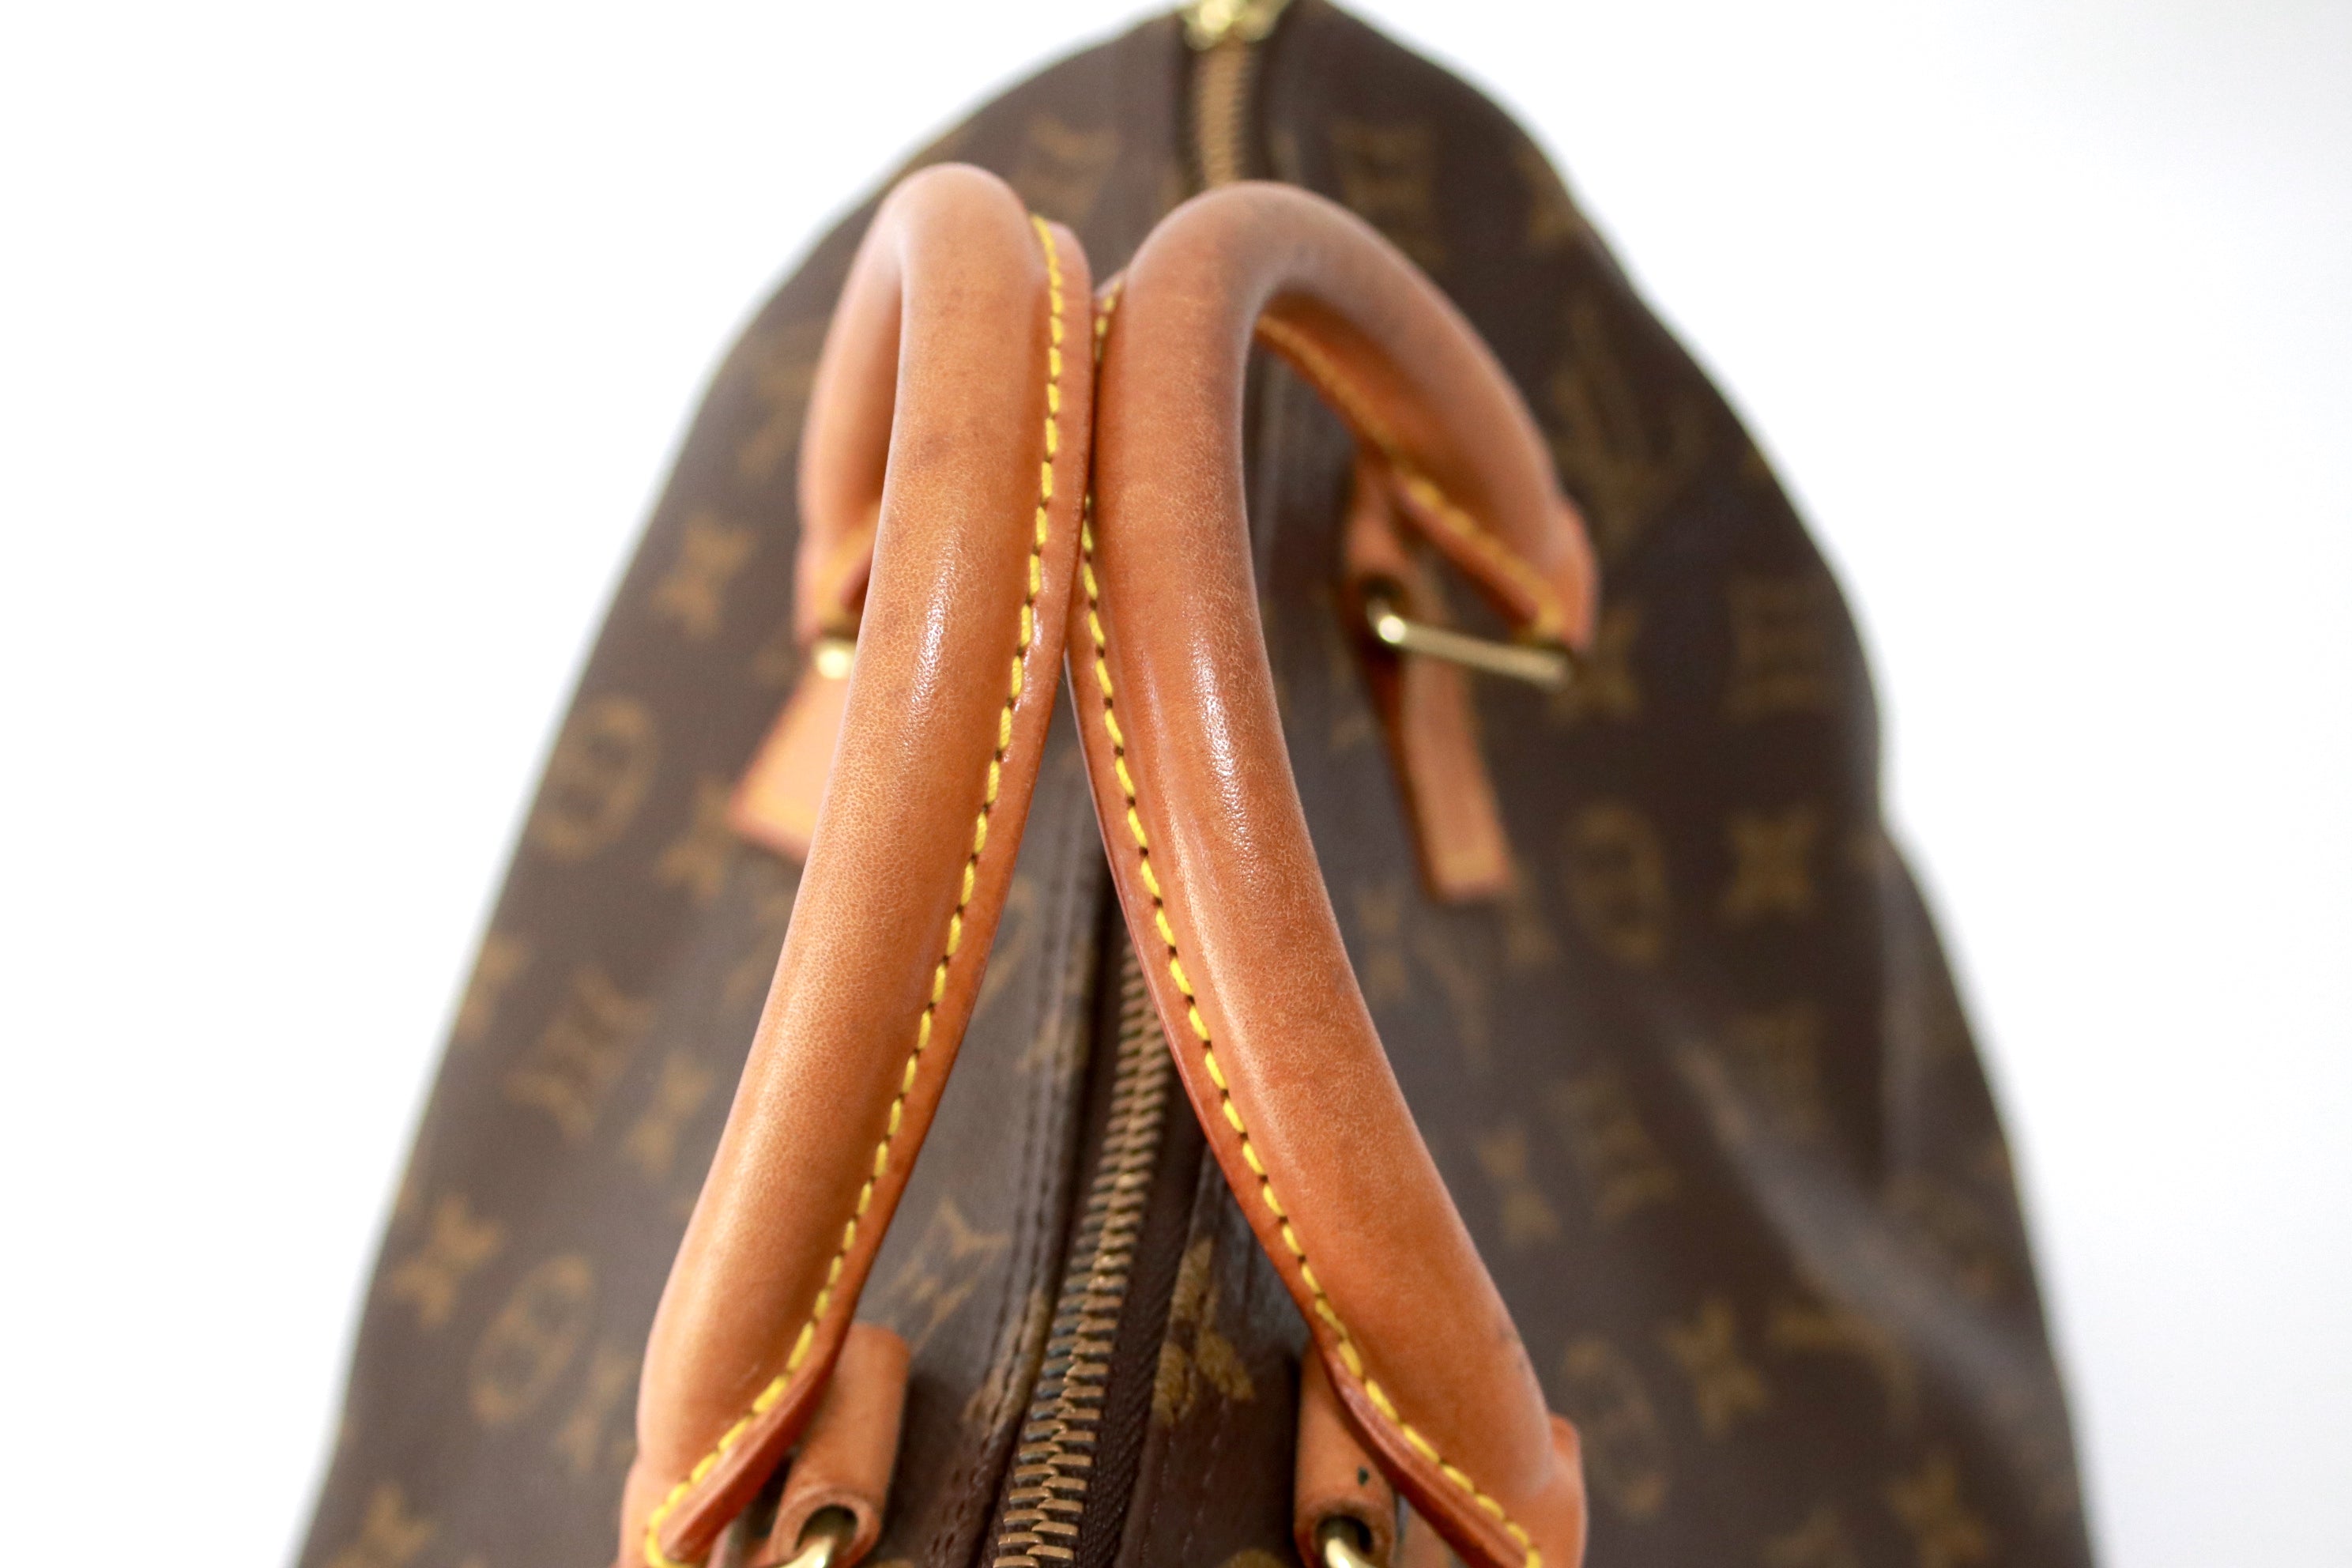 Louis Vuitton Speedy 30 Handbag Used (6807)